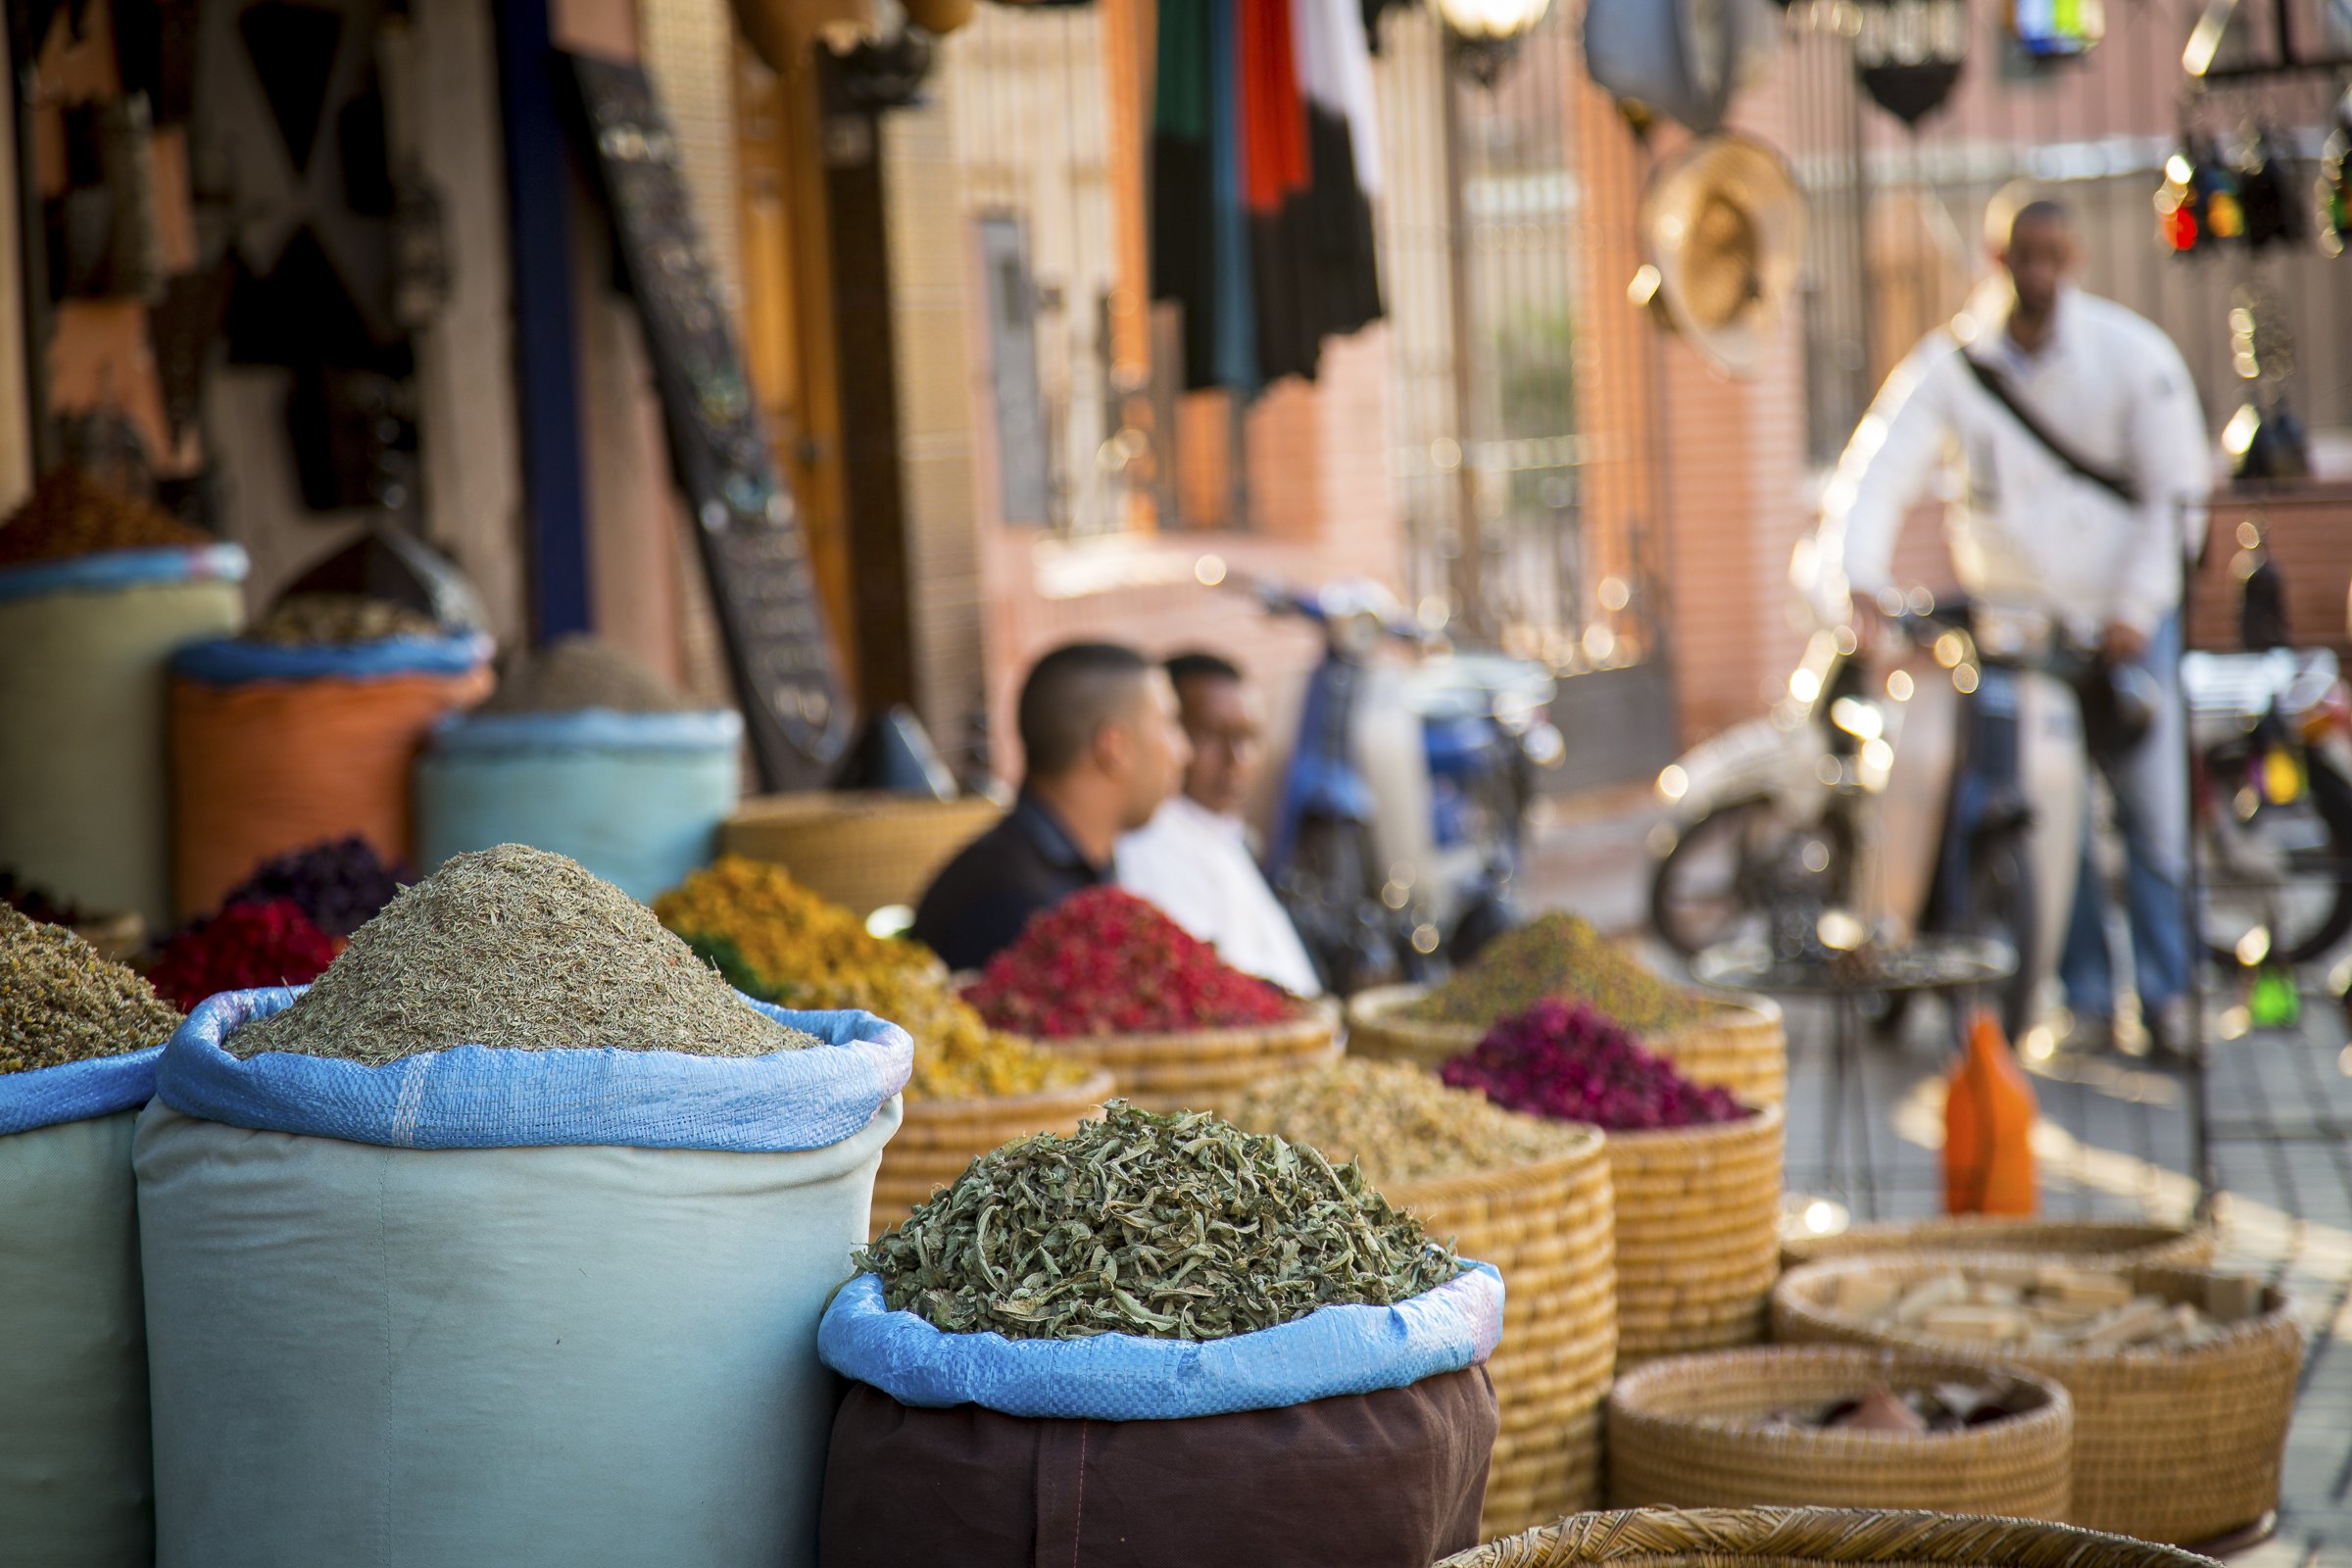 Herb alley. Medina, Marrakech